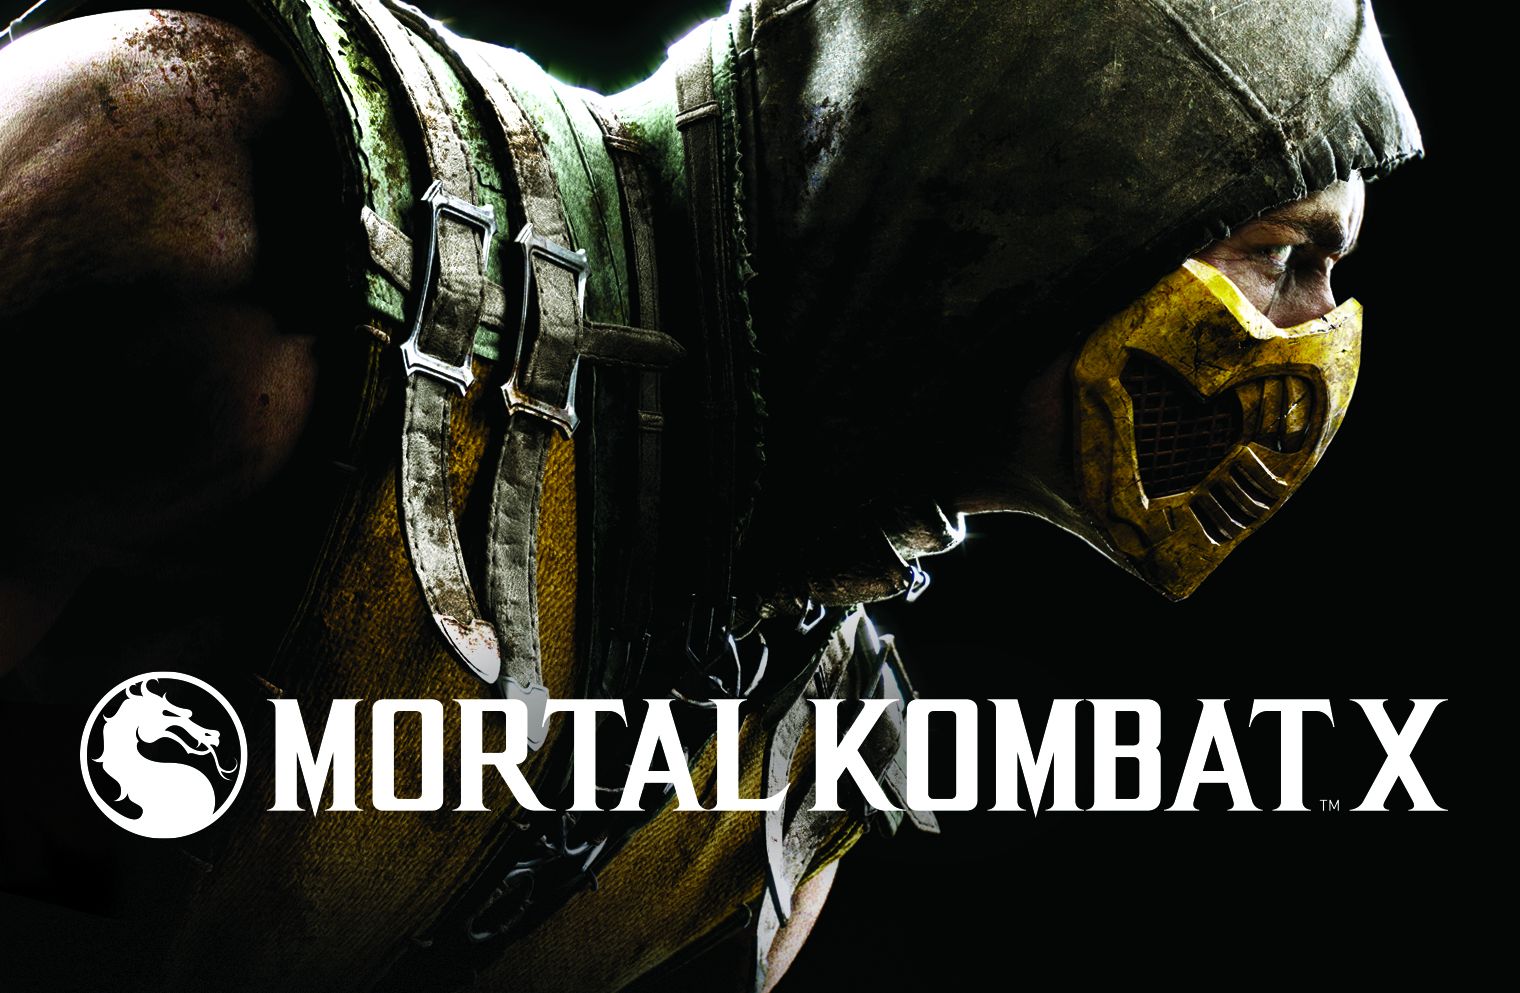 IM1264: Mortal Kombat X